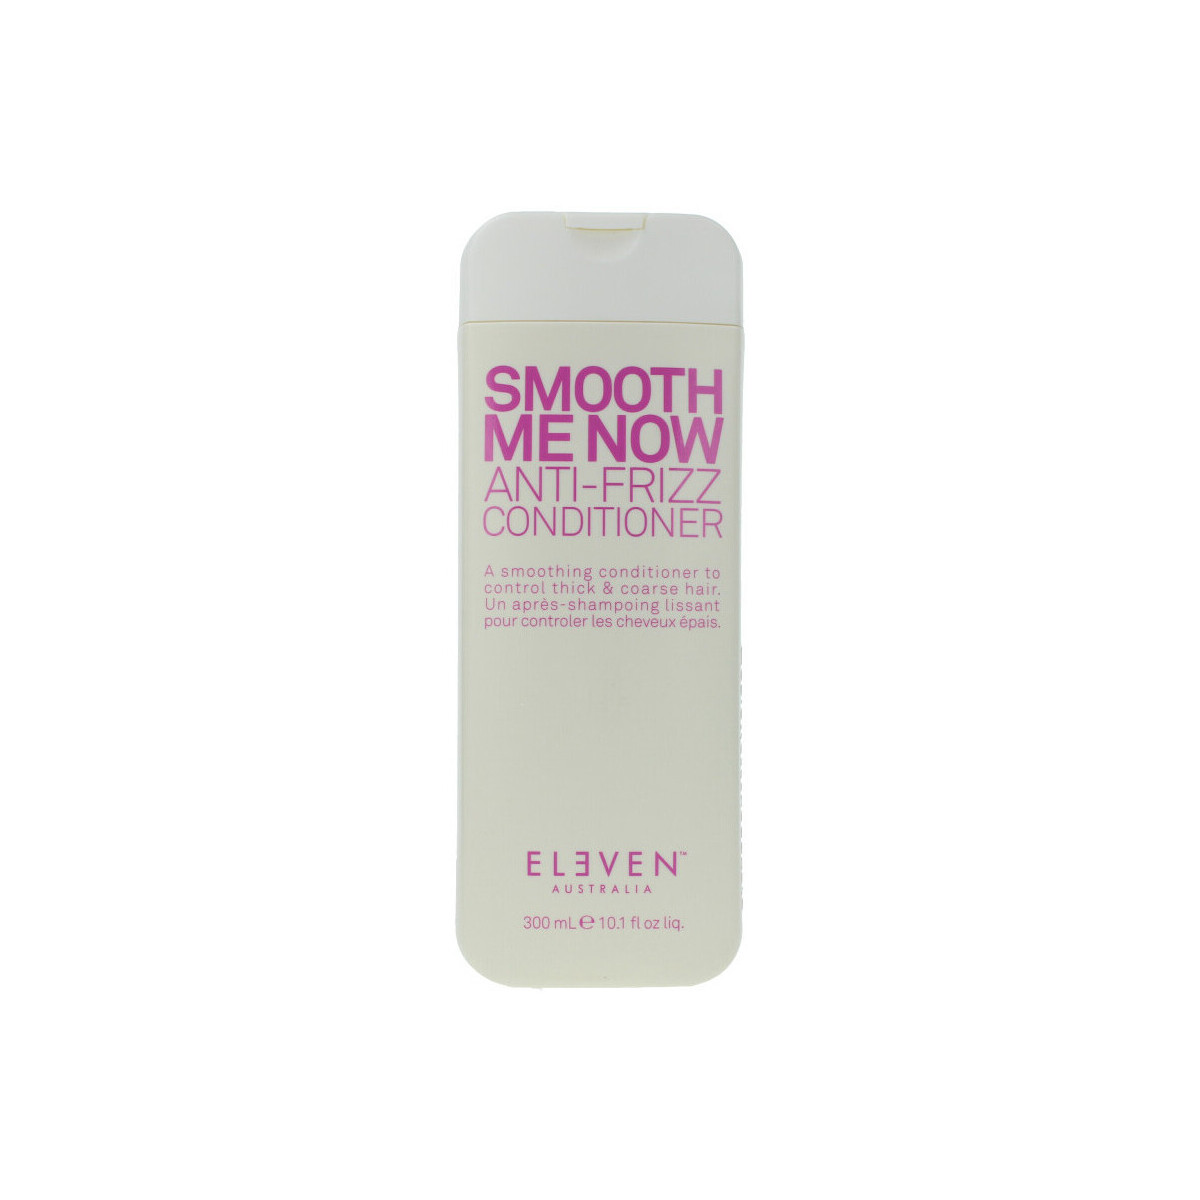 Beauté Soins & Après-shampooing Eleven Australia Smooth Me Now Anti-frizz Conditioner 